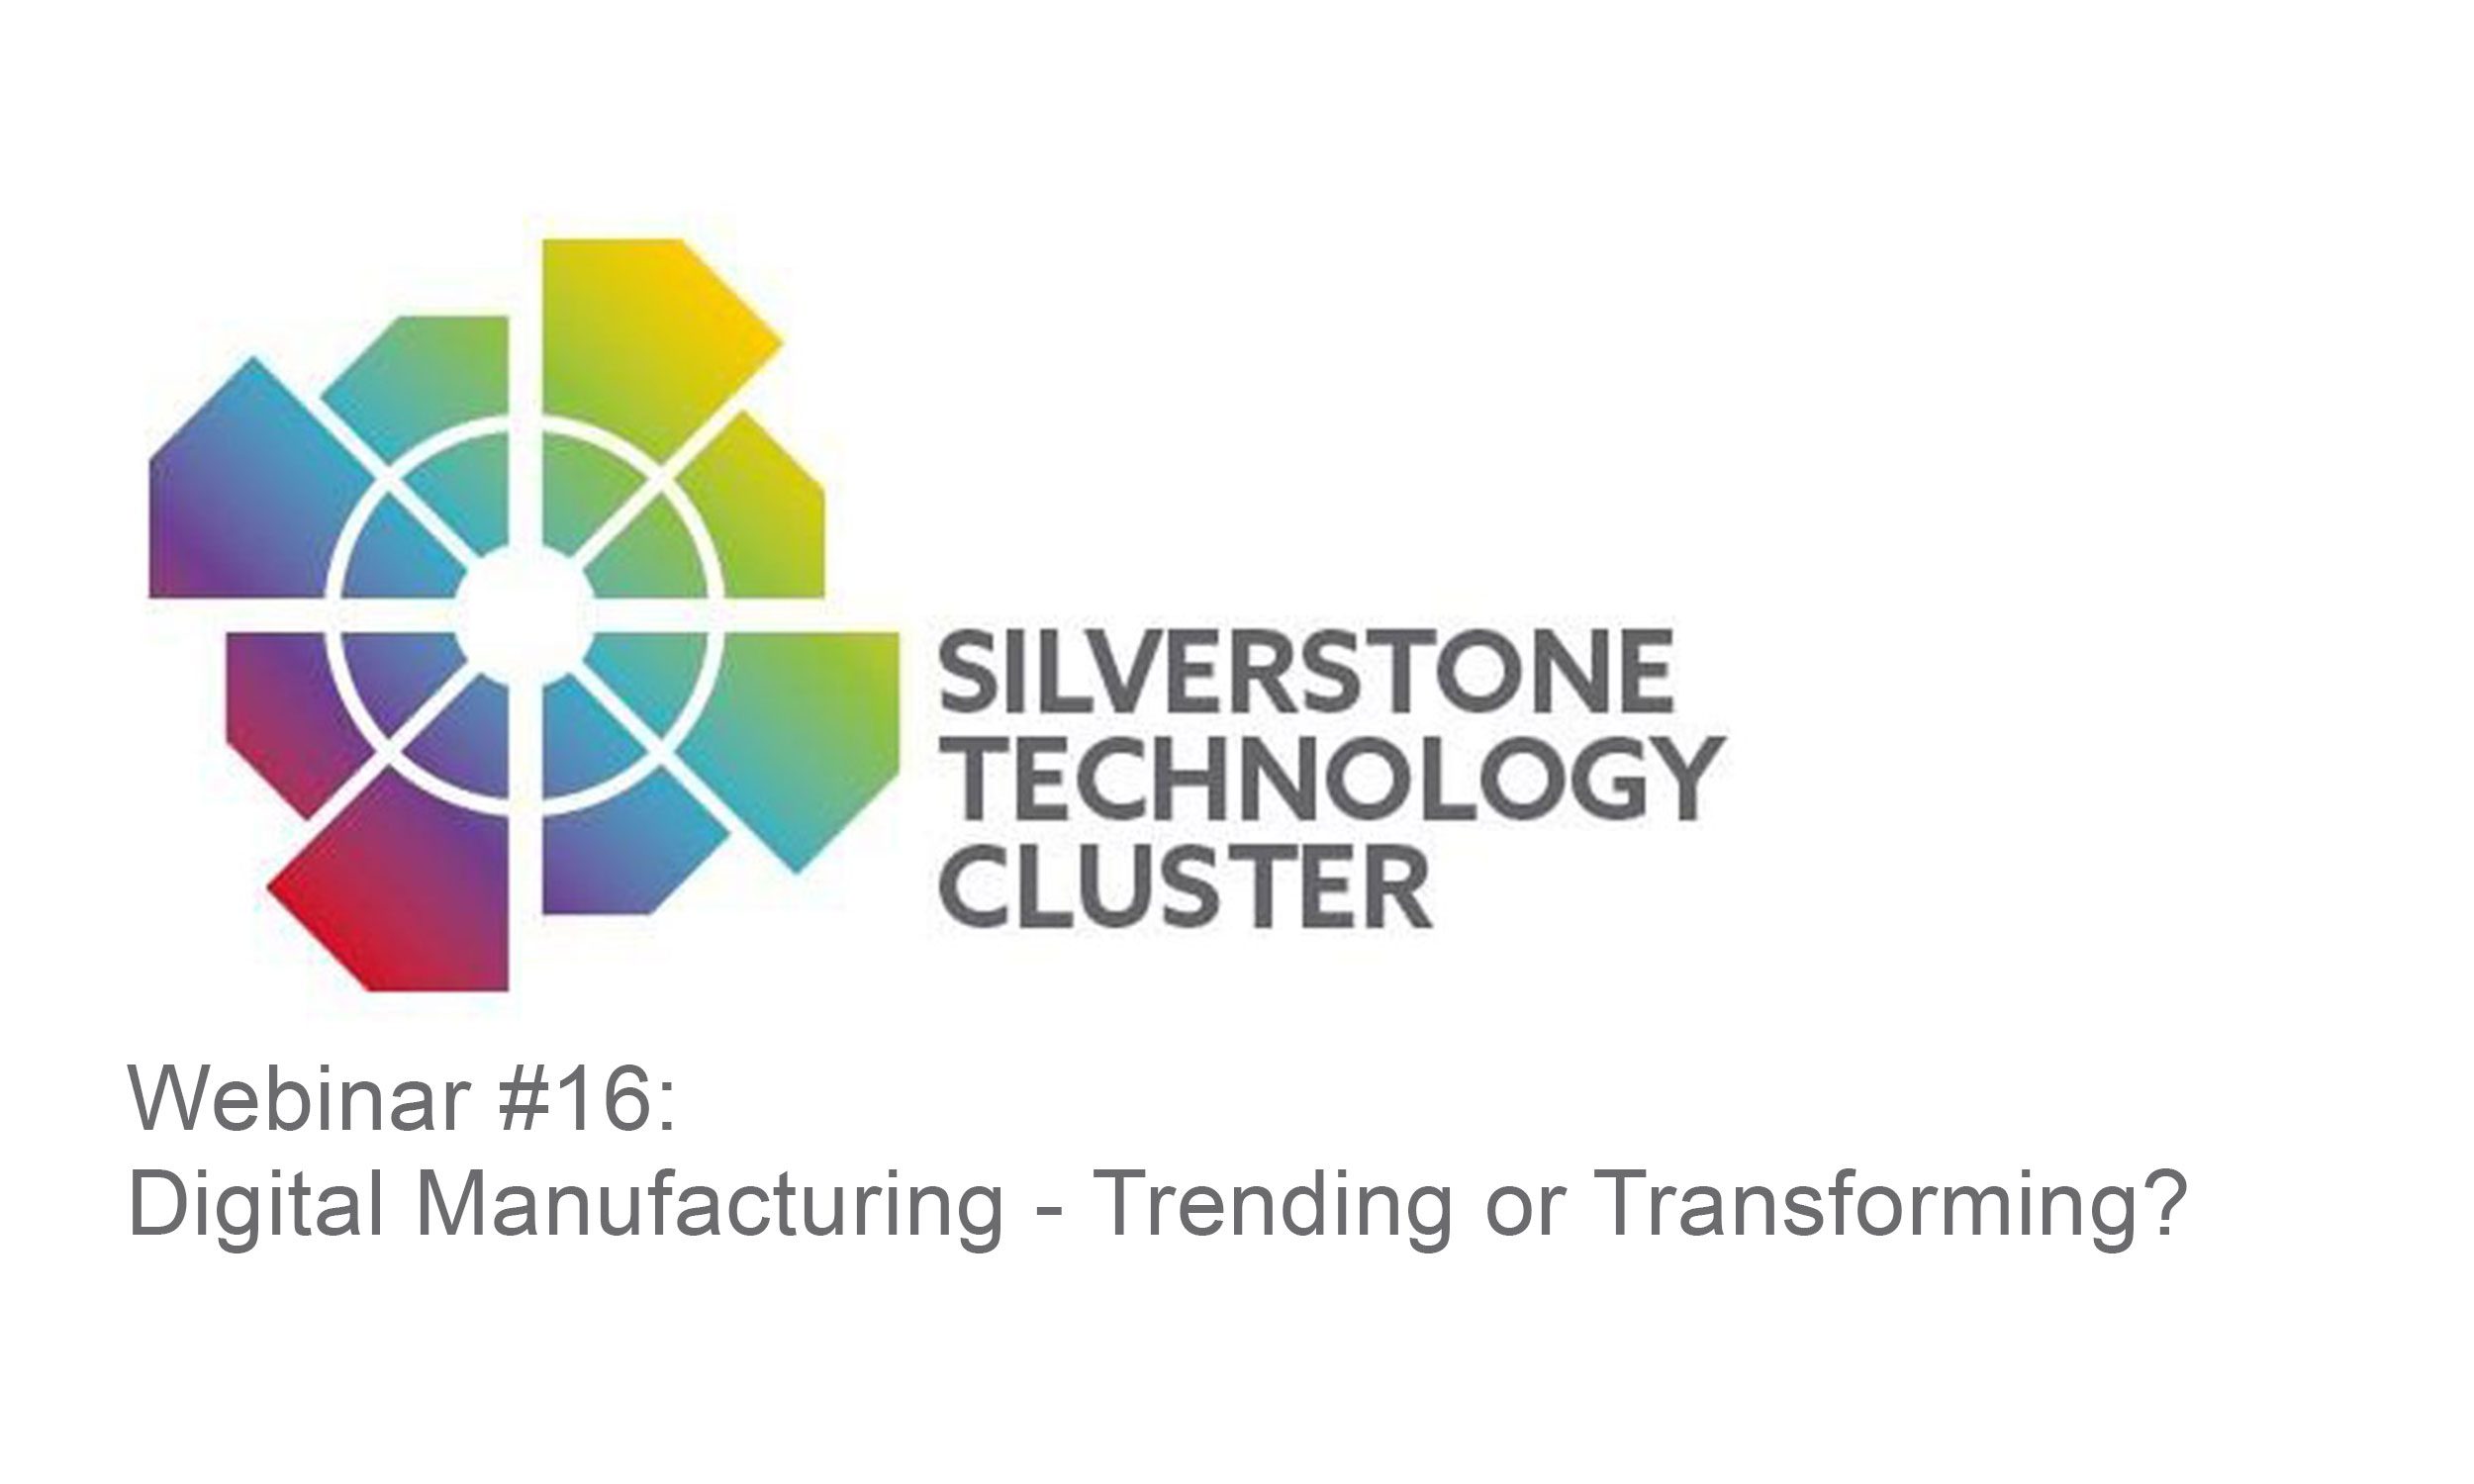 Digital Manufacturing - Trending or Transforming?